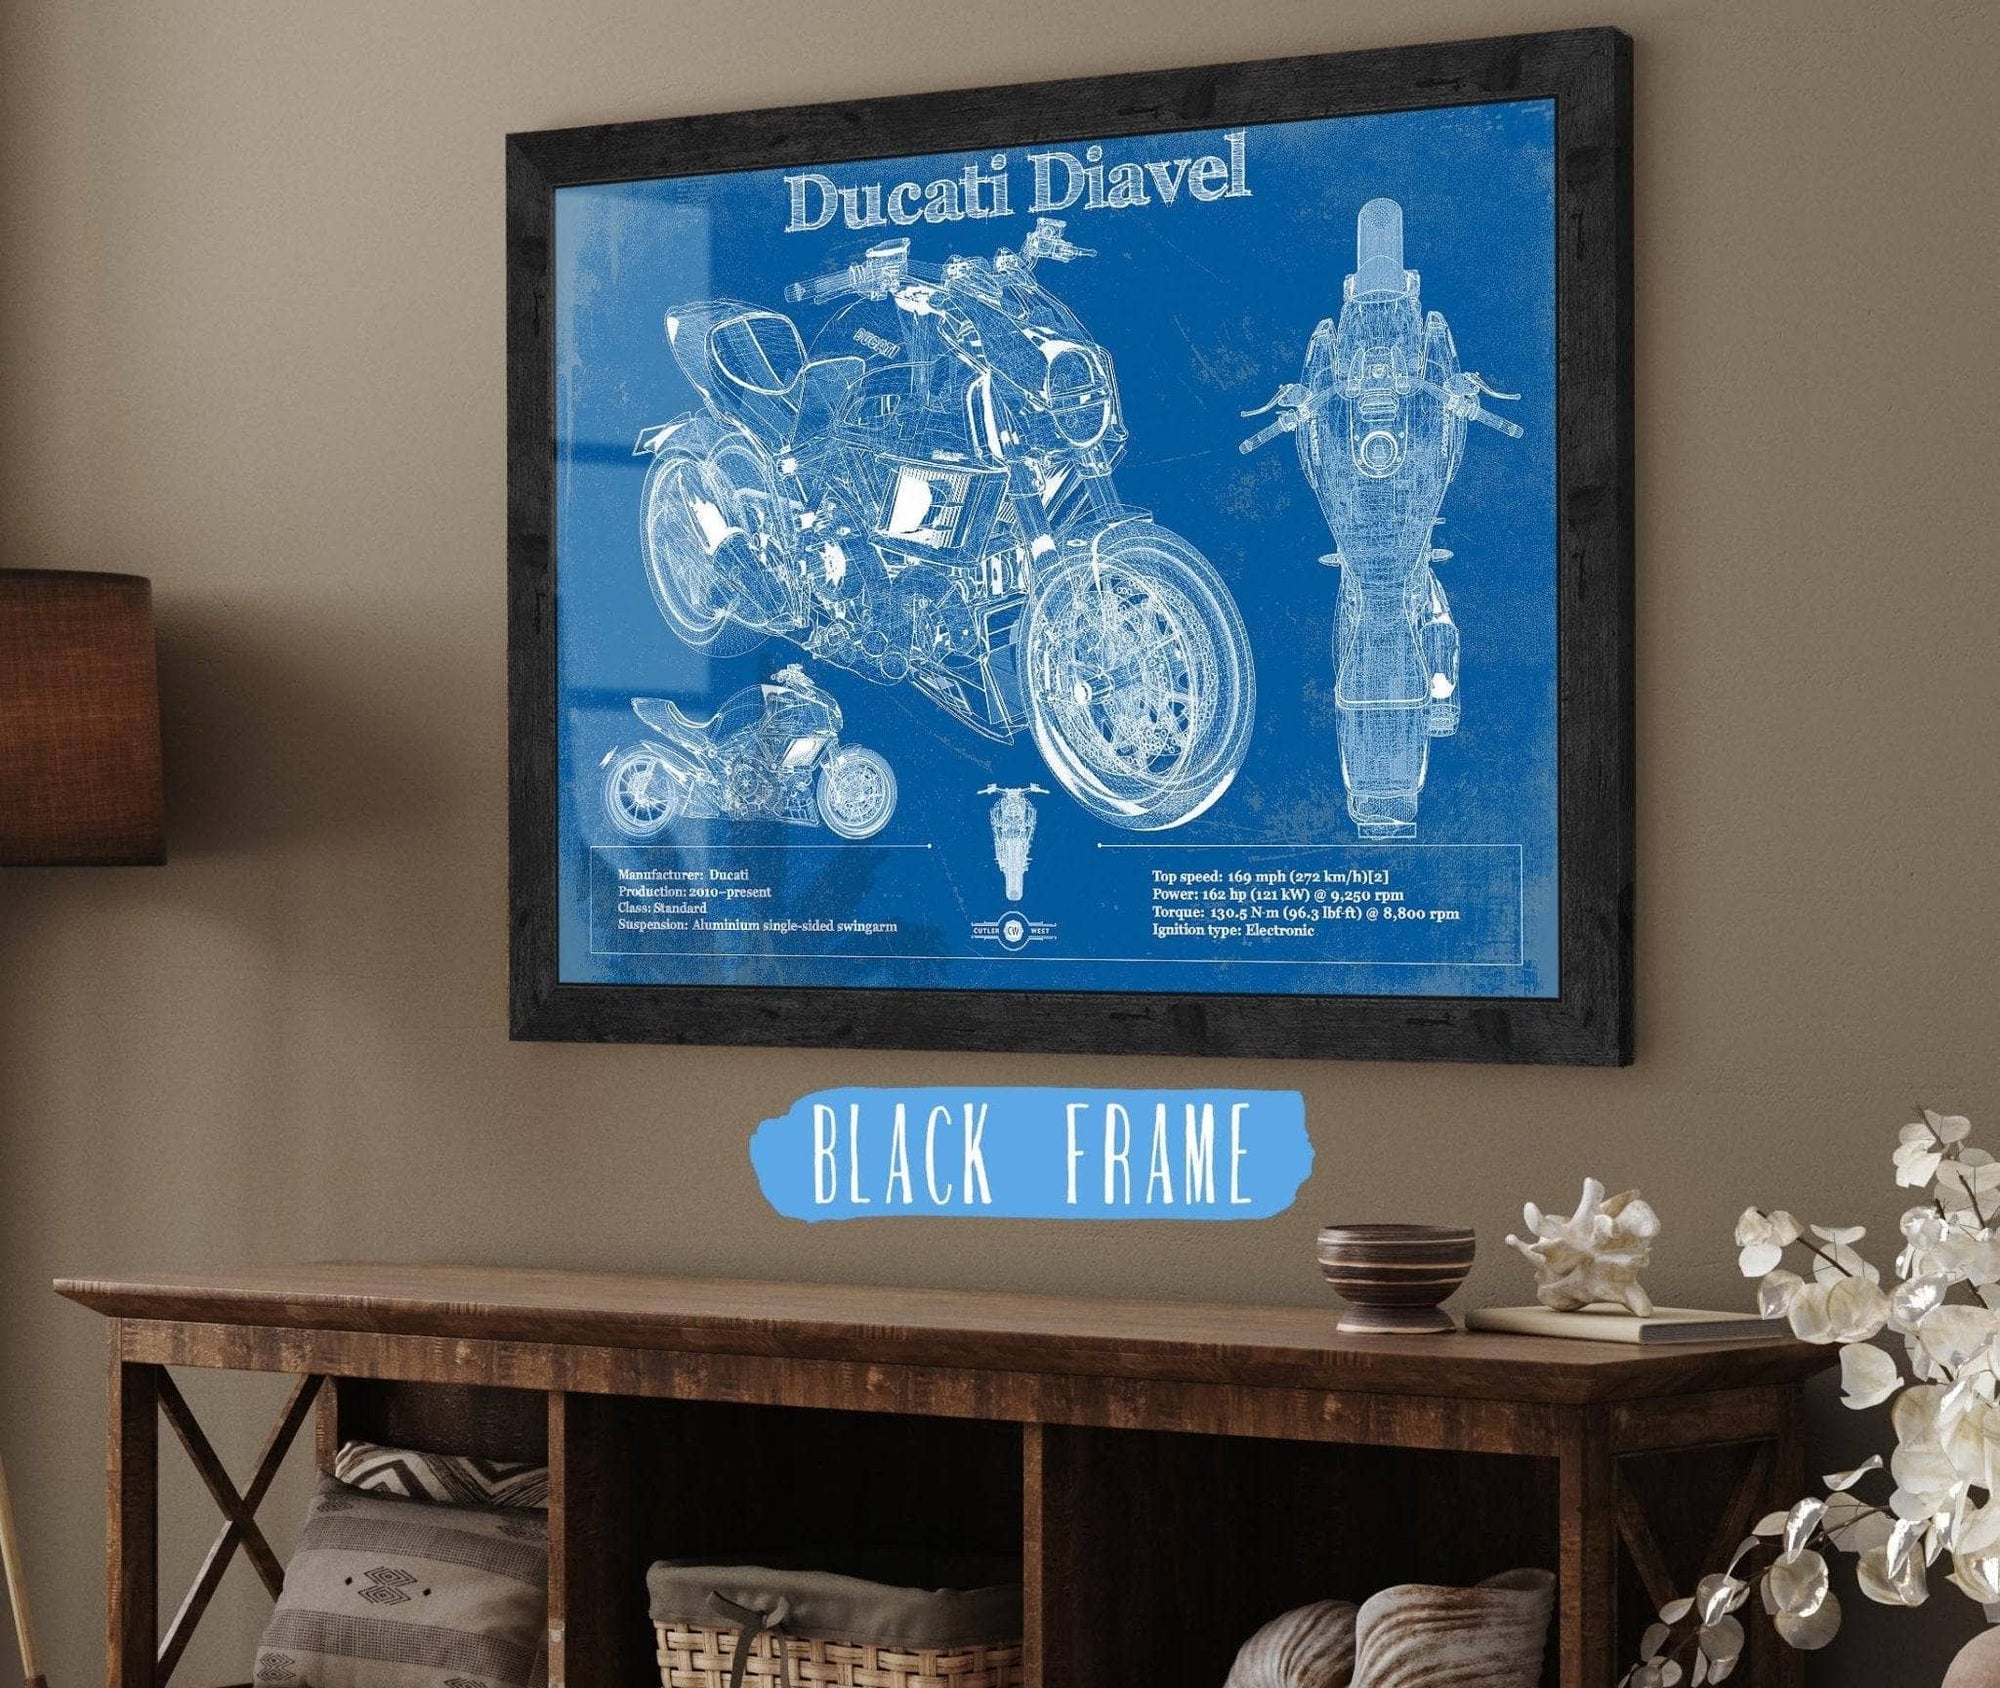 Cutler West 14" x 11" / Black Frame Ducati Diavel Blueprint Motorcycle Patent Print 845000332_61542